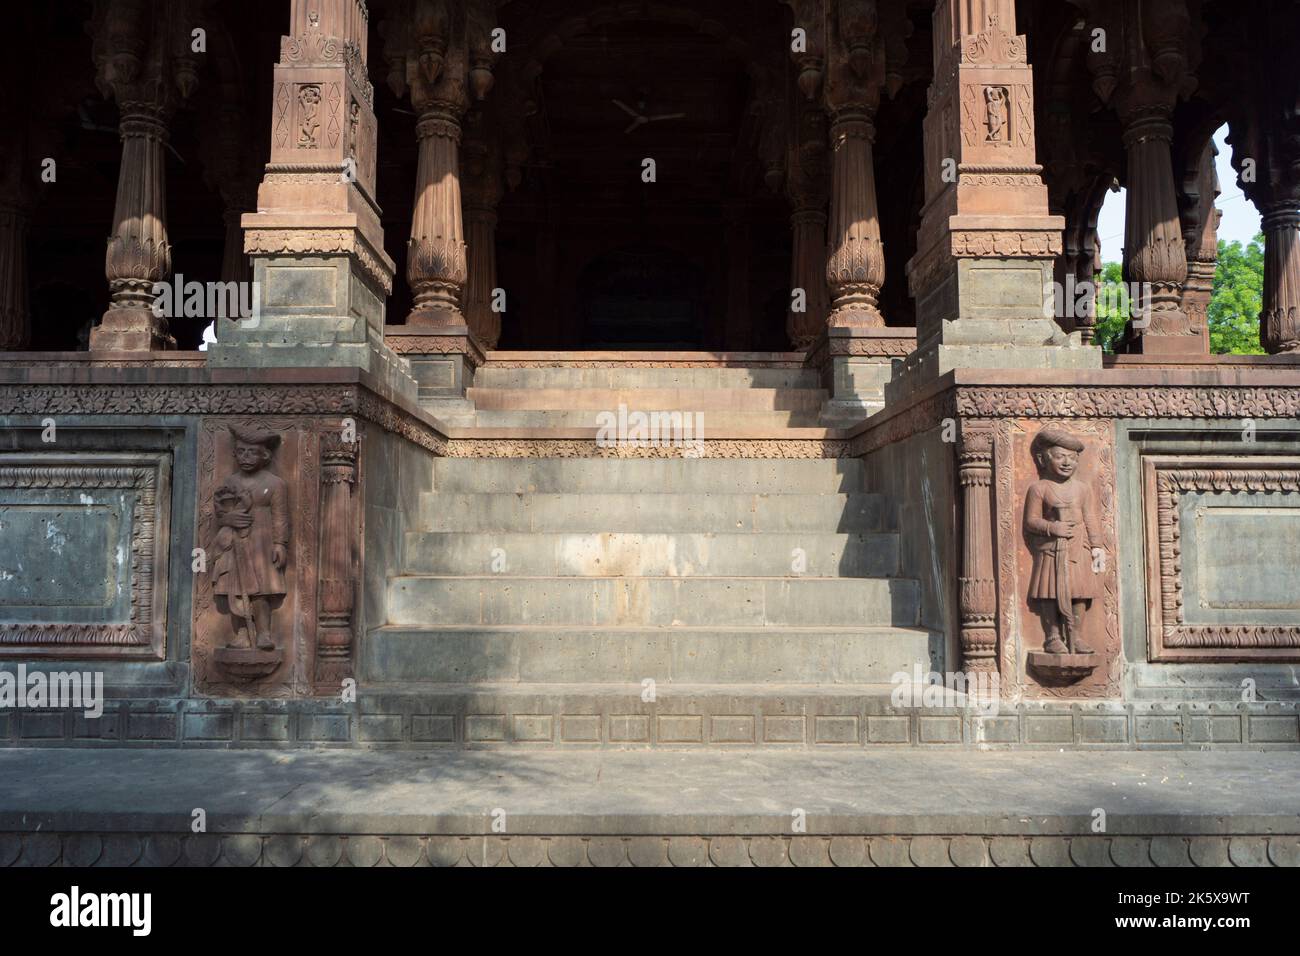 Escaleras de entrada dan la bienvenida a esculturas de Krishnapura Chhatri, Indore, Madhya Pradesh. Arquitectura India. Arquitectura antigua del templo indio. Foto de stock